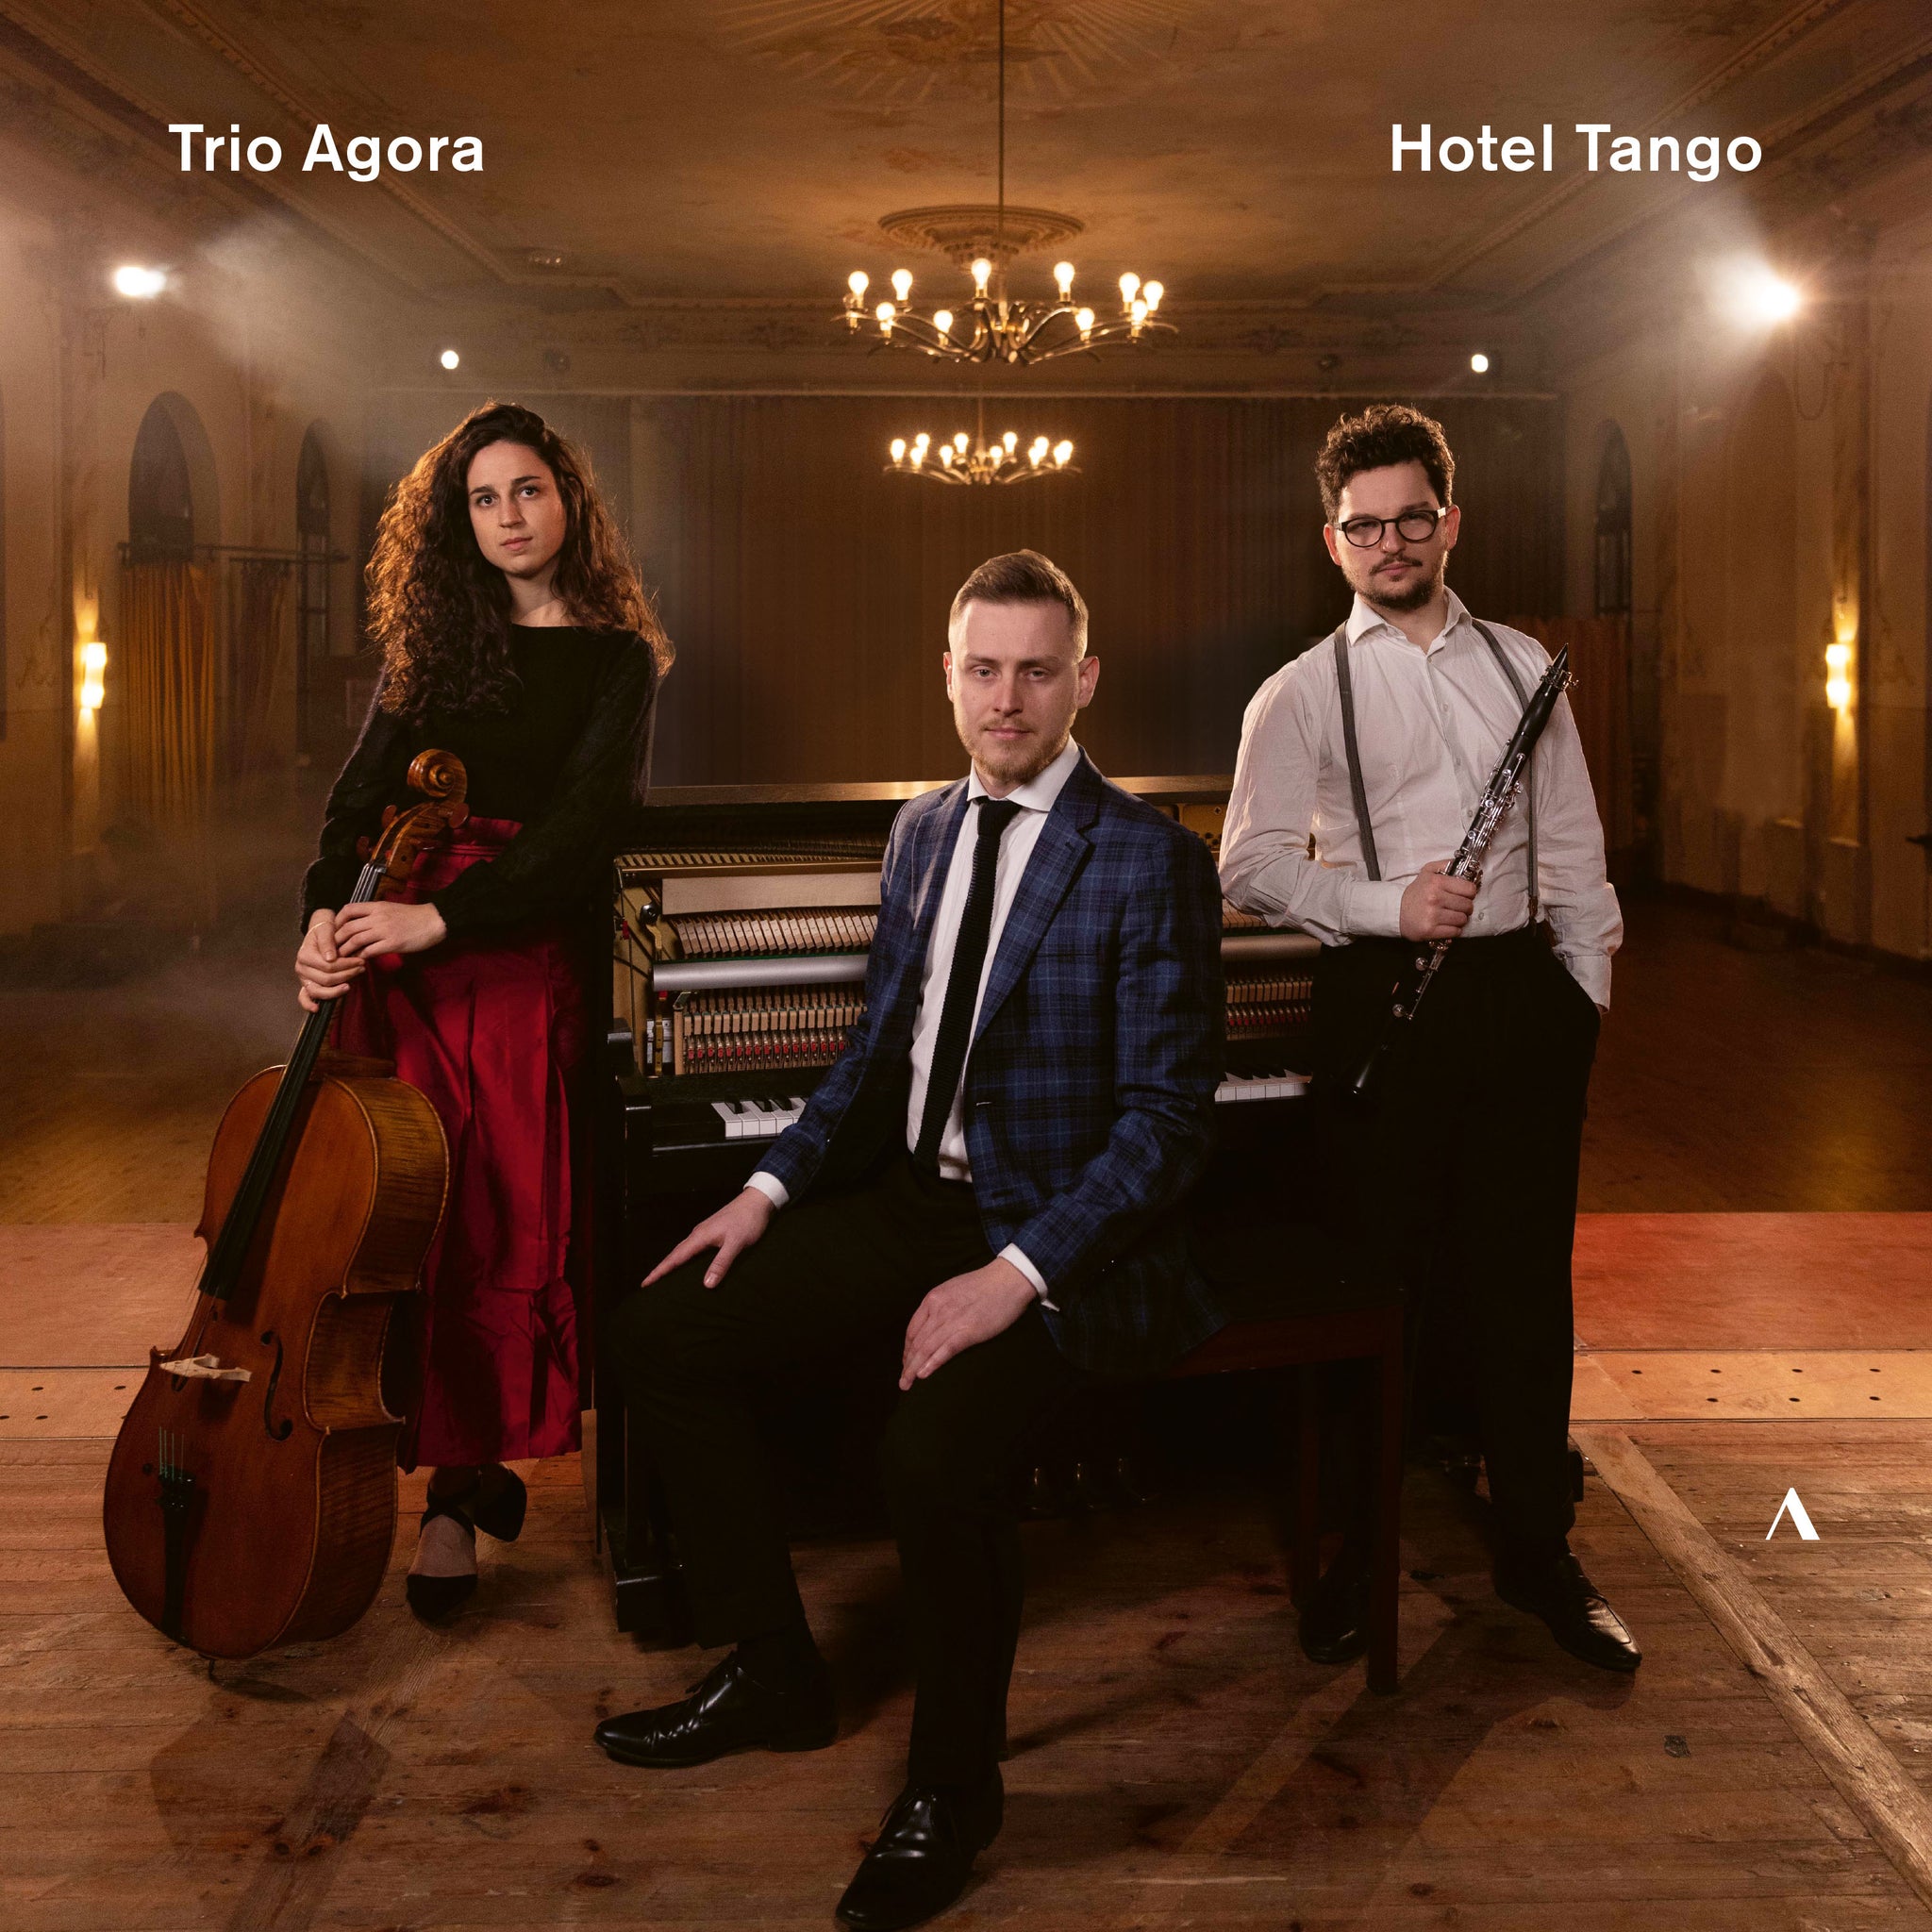 Hotel Tango / Trio Agora